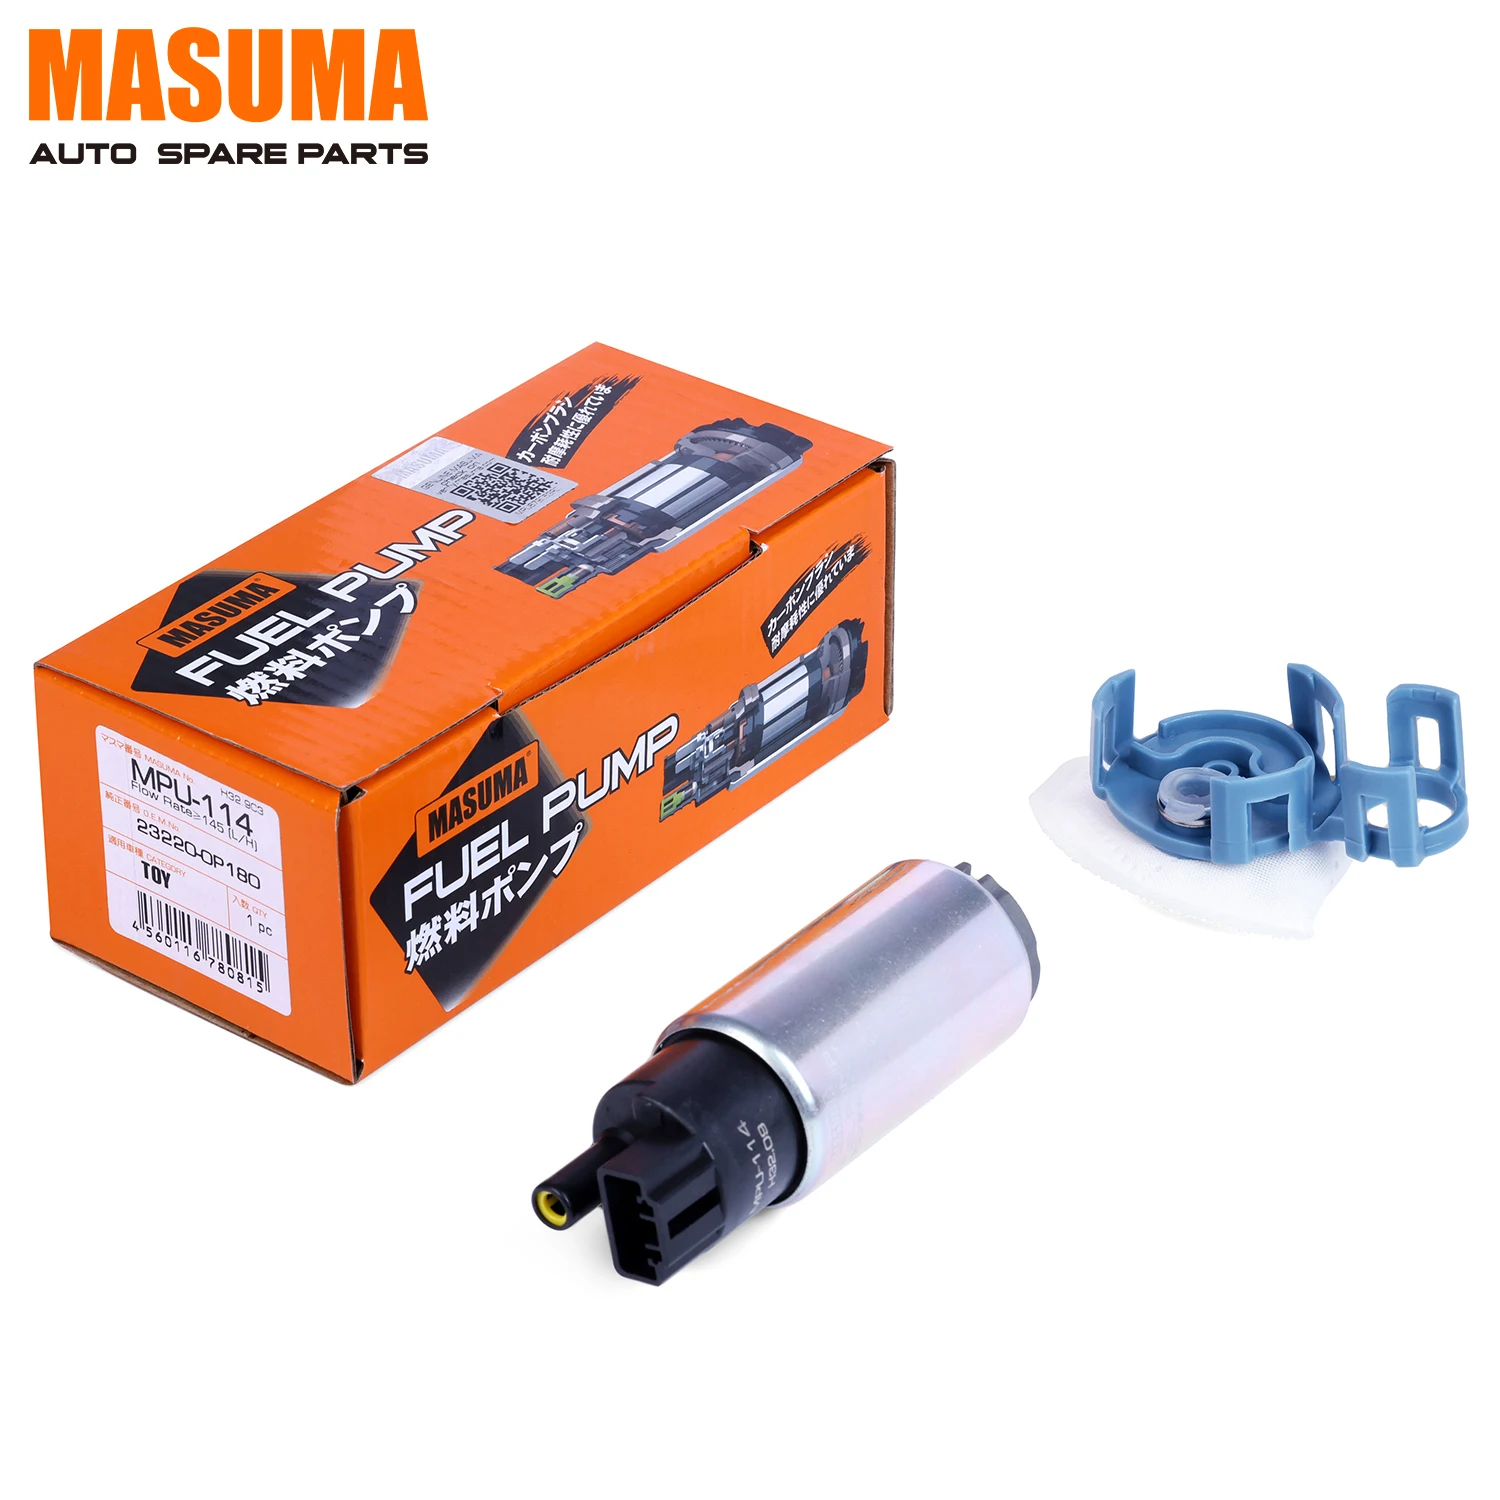 MPU-114 MASUMA Factory Auto Car Electric Fuel Pump 23221-36030 